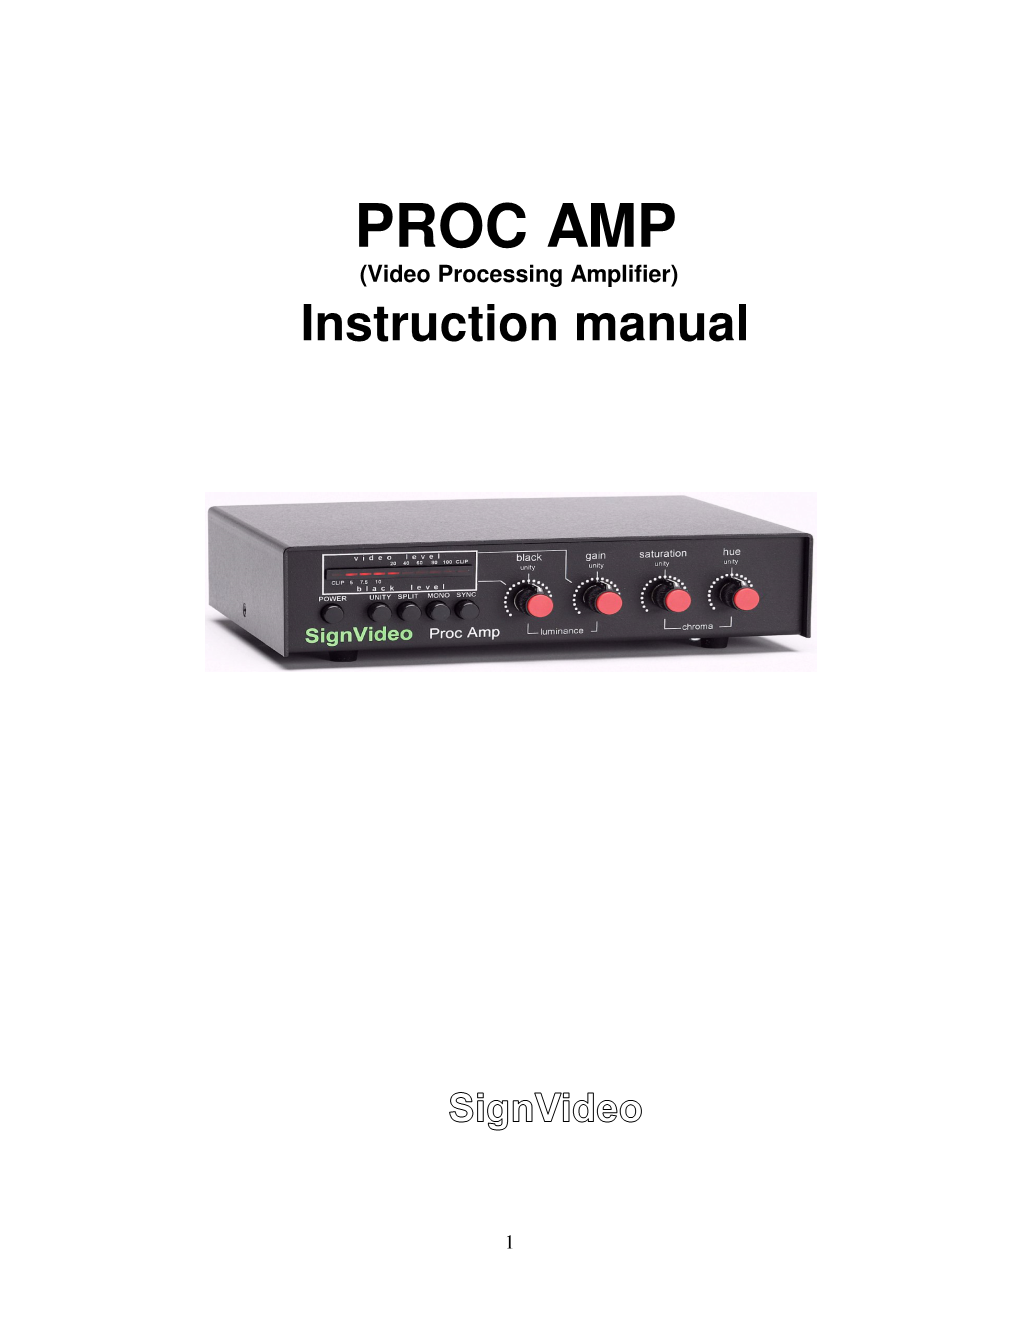 PROC AMP (Video Processing Amplifier) Instruction Manual